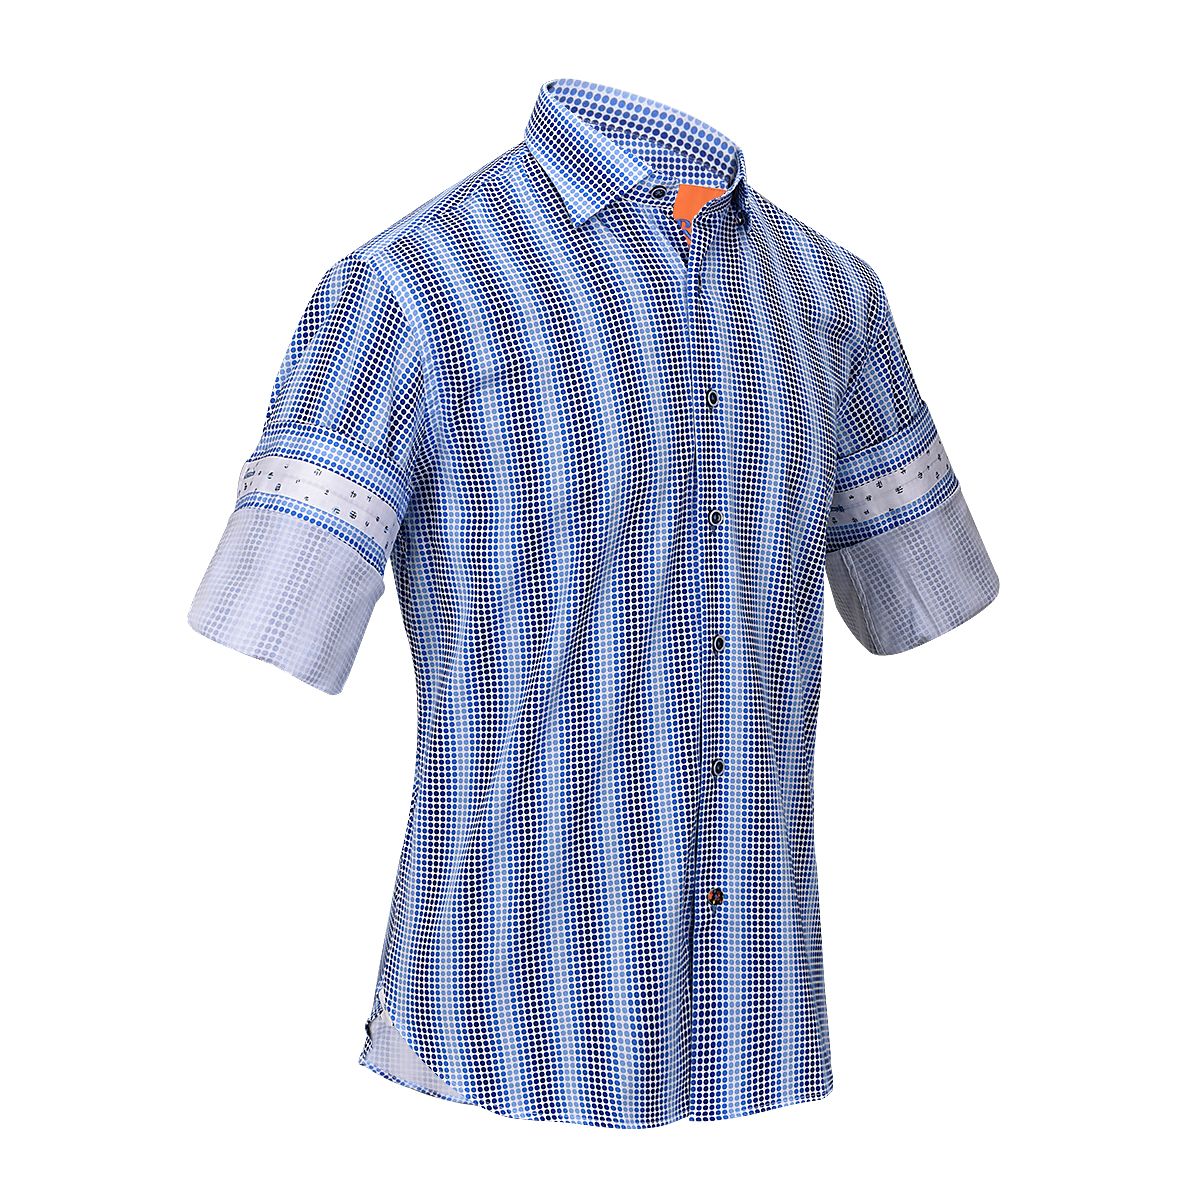 CM04619 - Cuadra blue casual fashion long sleeve cotton shirt for men.-CUADRA-Kuet-Cuadra-Boots